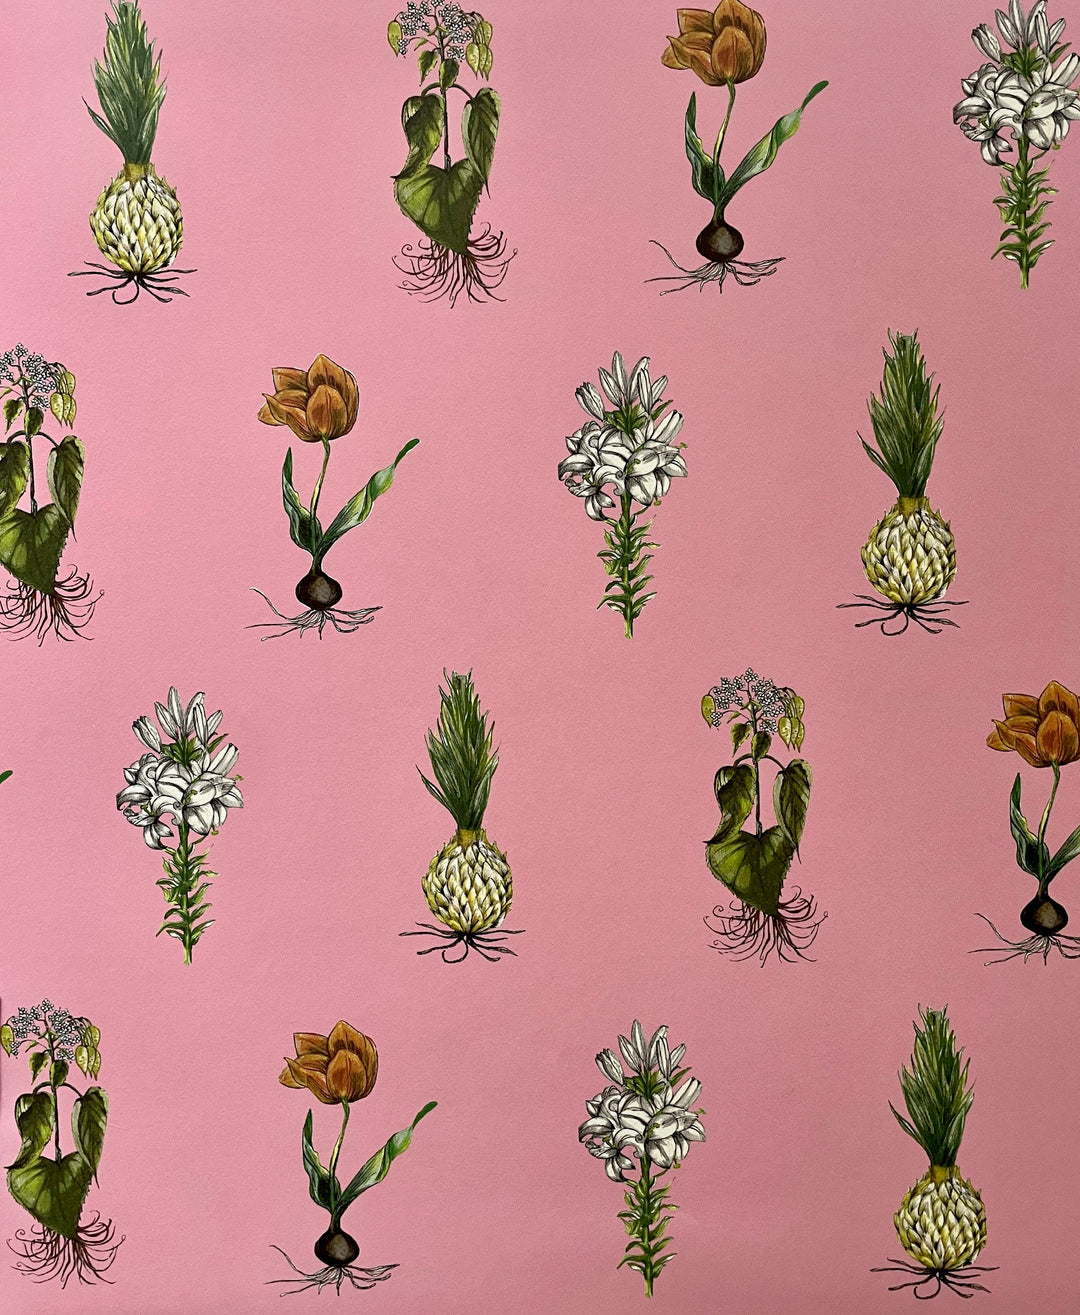 jojo-trixie-botanicals-wallpaper-pink-repeated-print-bulbs-flowers-plants